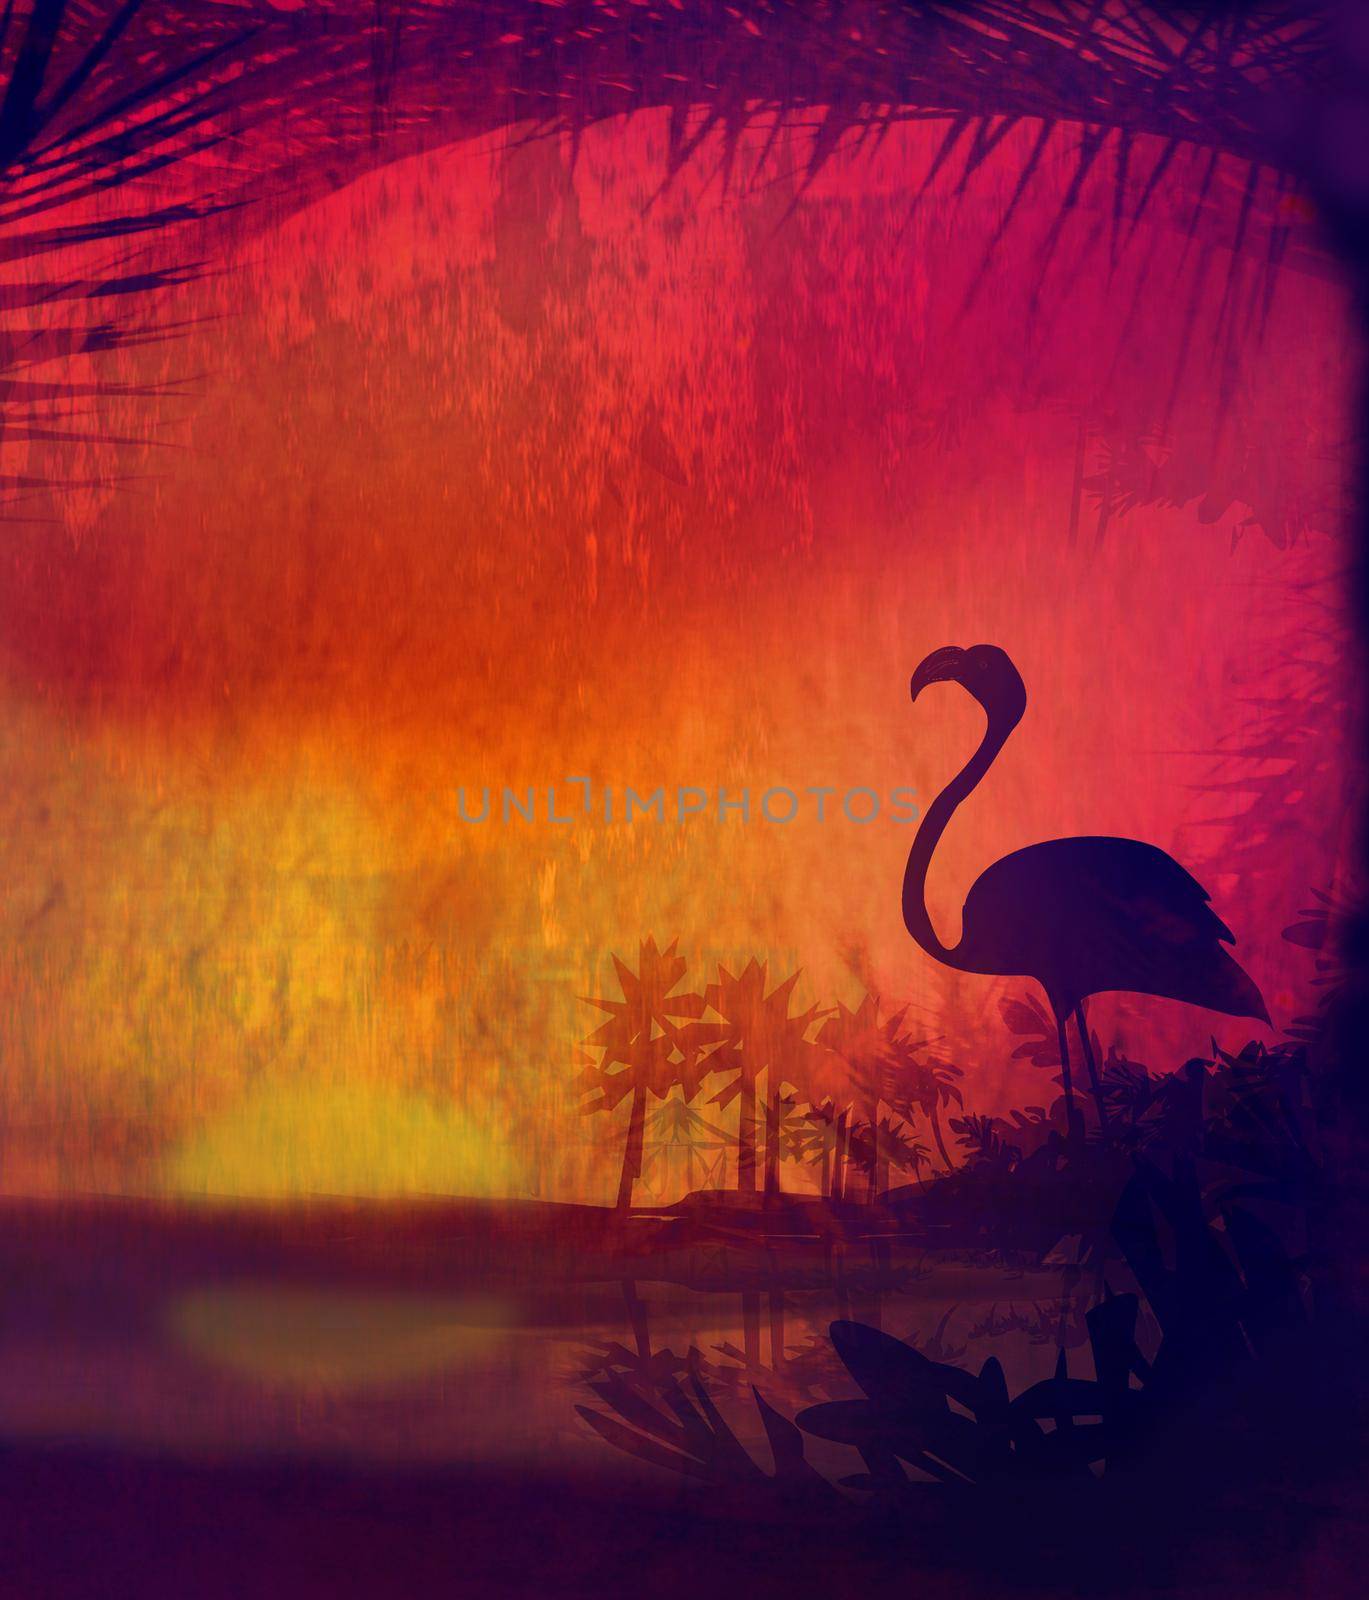 flamingo on Tropical Peaceful Sunset